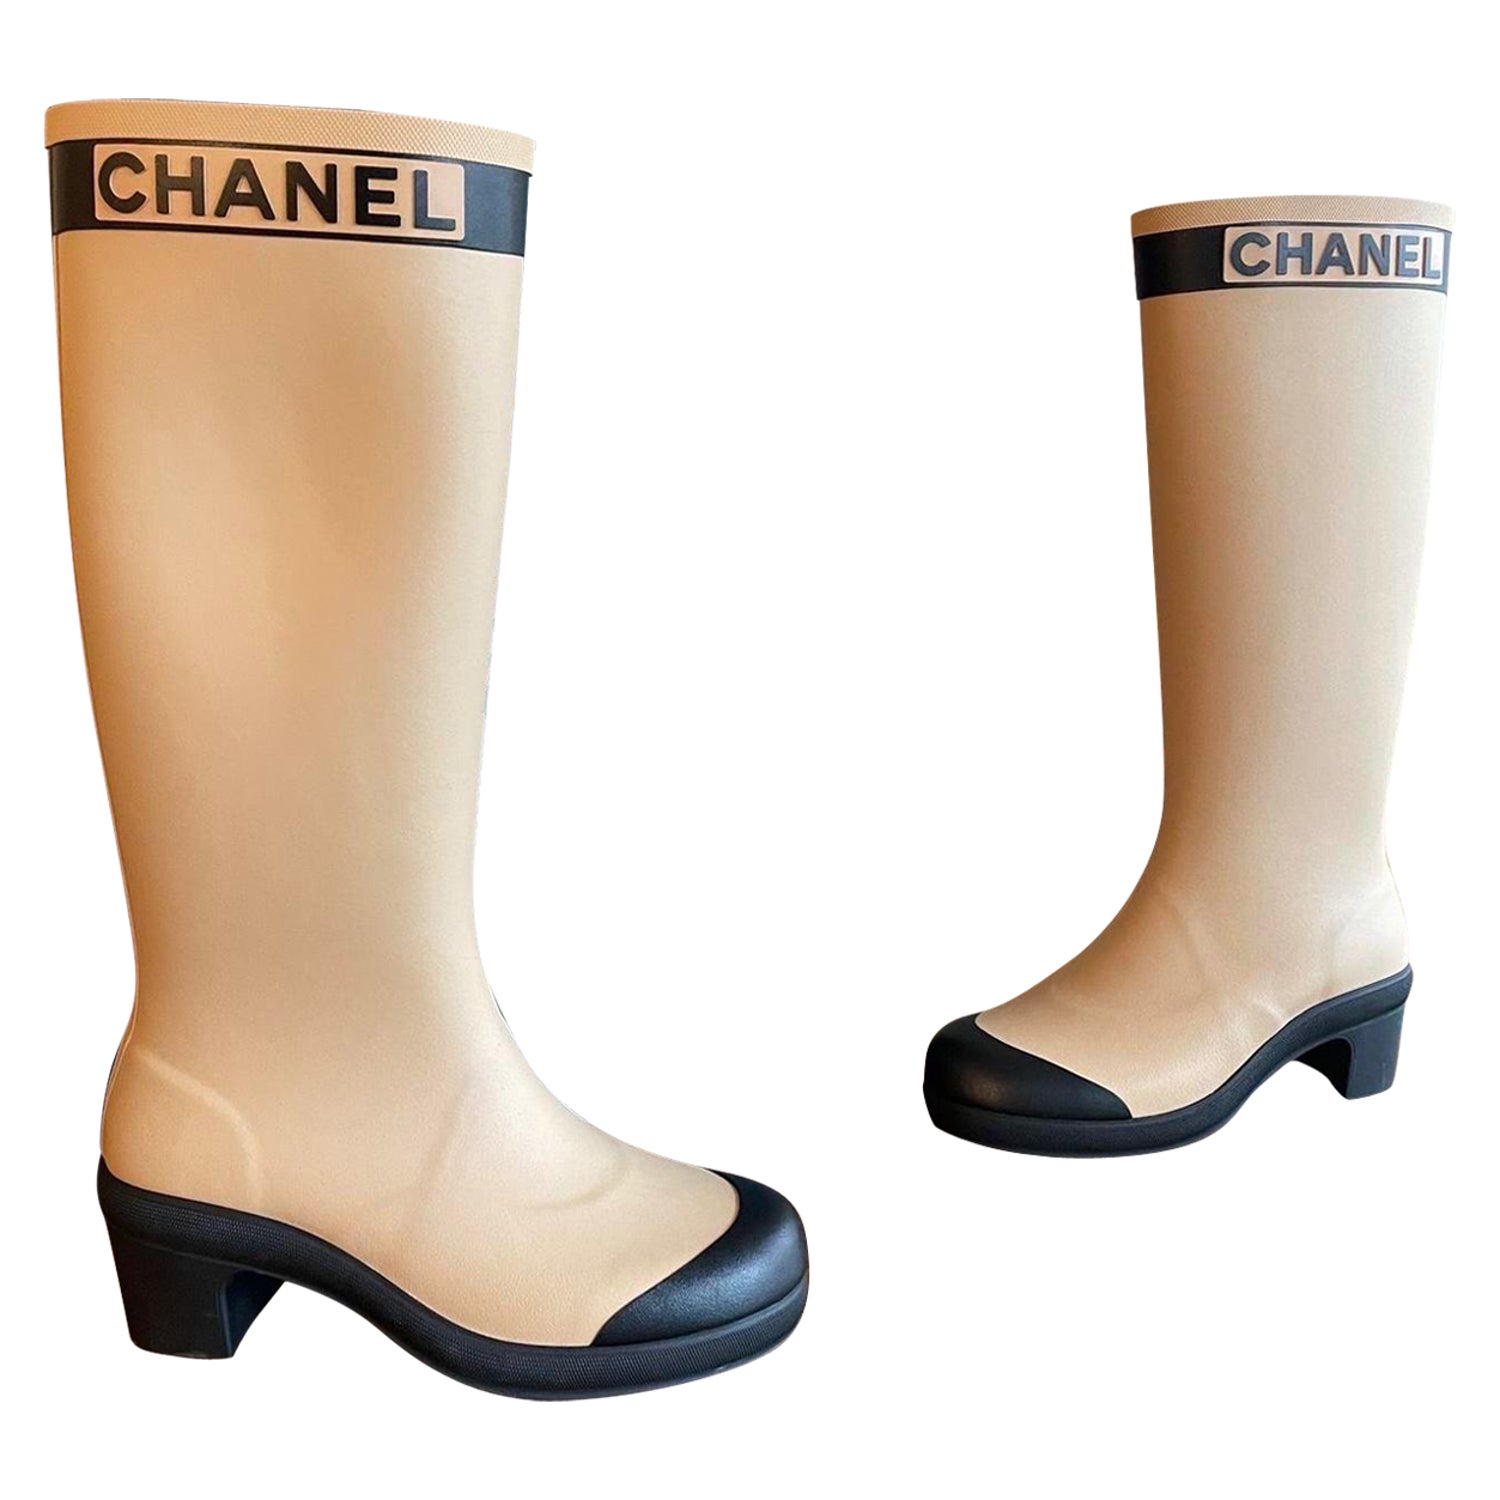 Chanel Camellia Rain Boots size 38